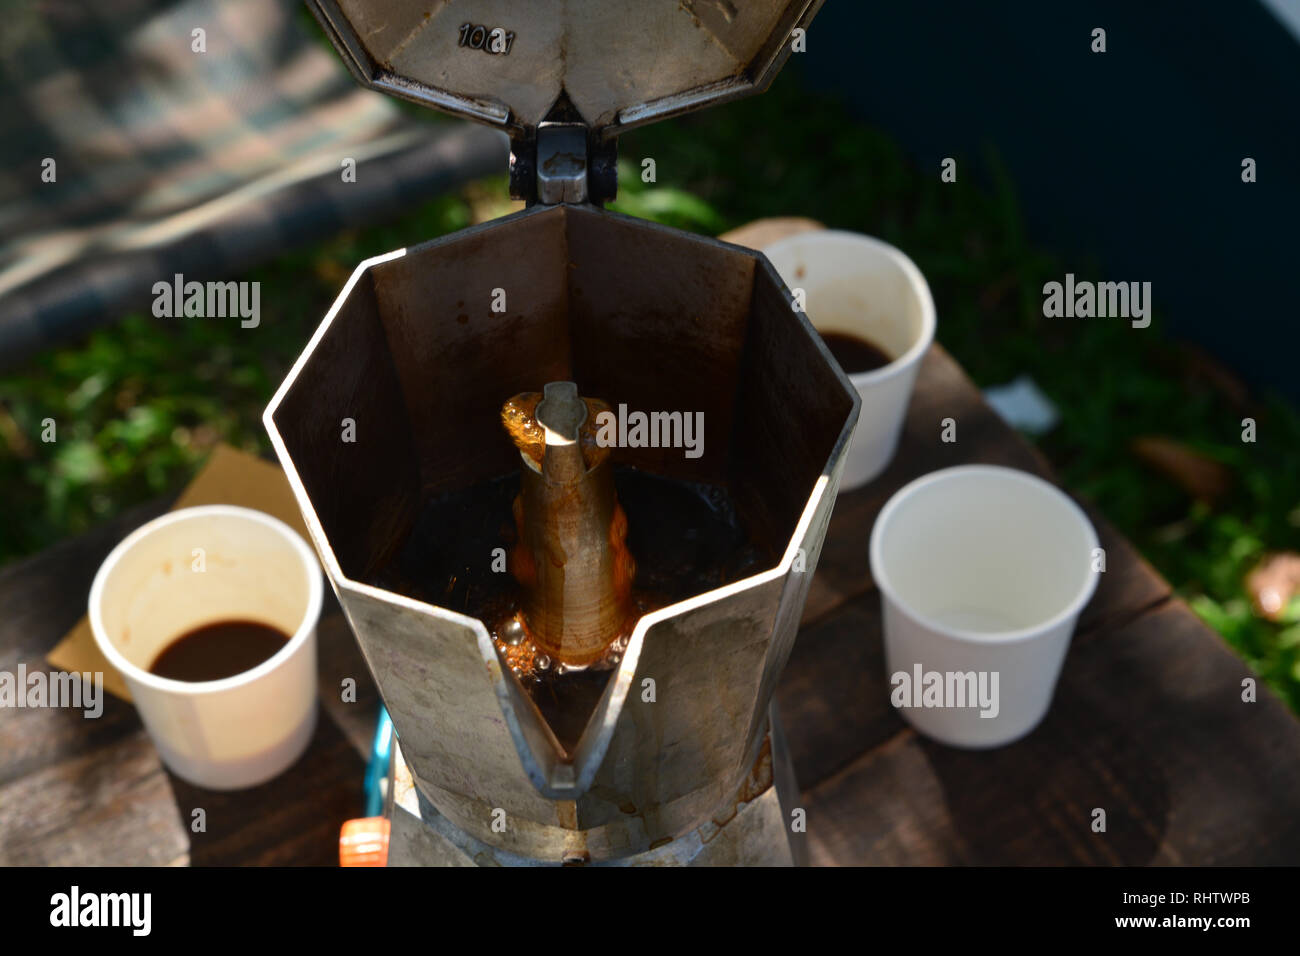 https://c8.alamy.com/comp/RHTWPB/boiling-coffee-by-moka-pot-RHTWPB.jpg